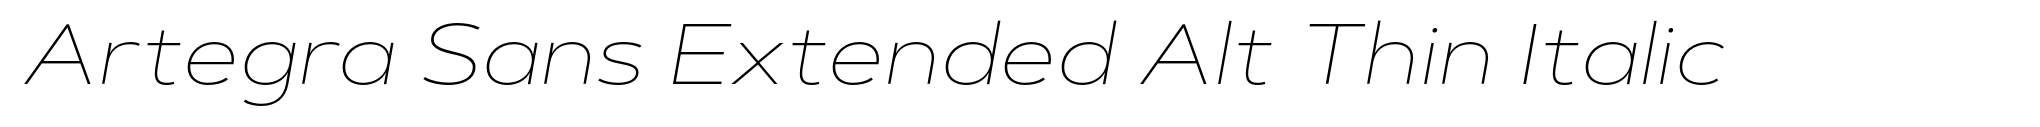 Artegra Sans Extended Alt Thin Italic image